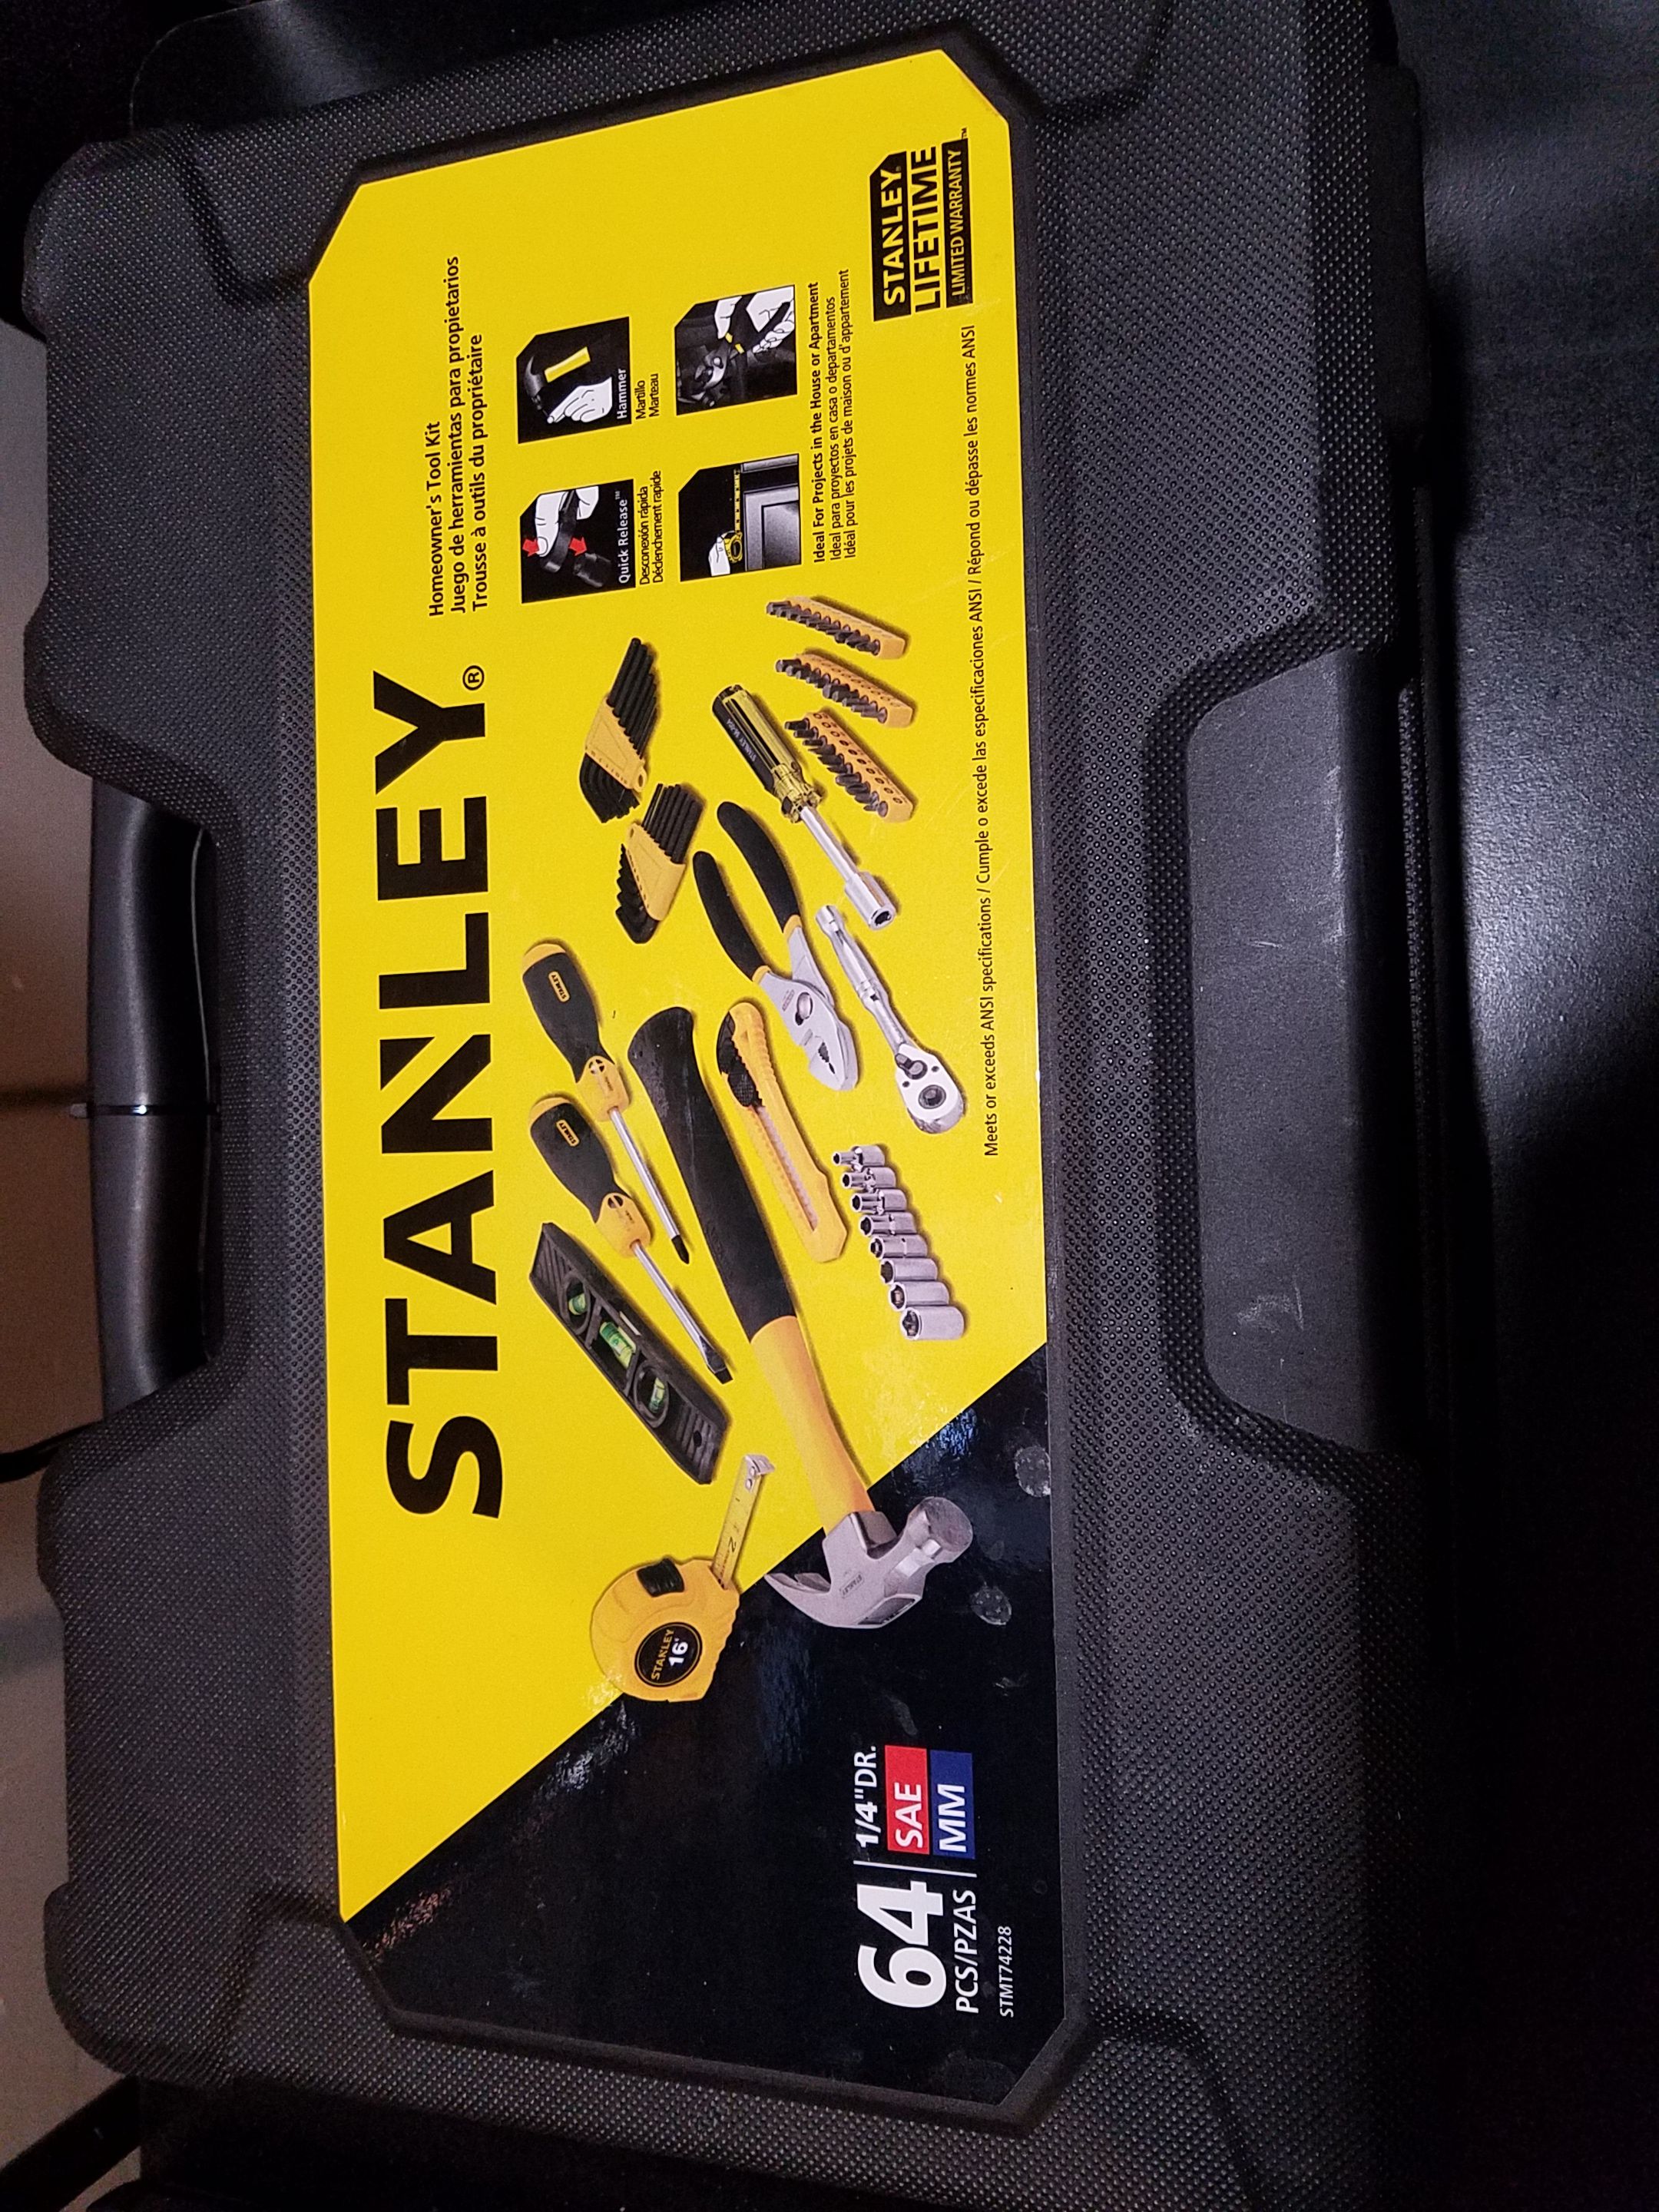 Stanley 64 piece tool set